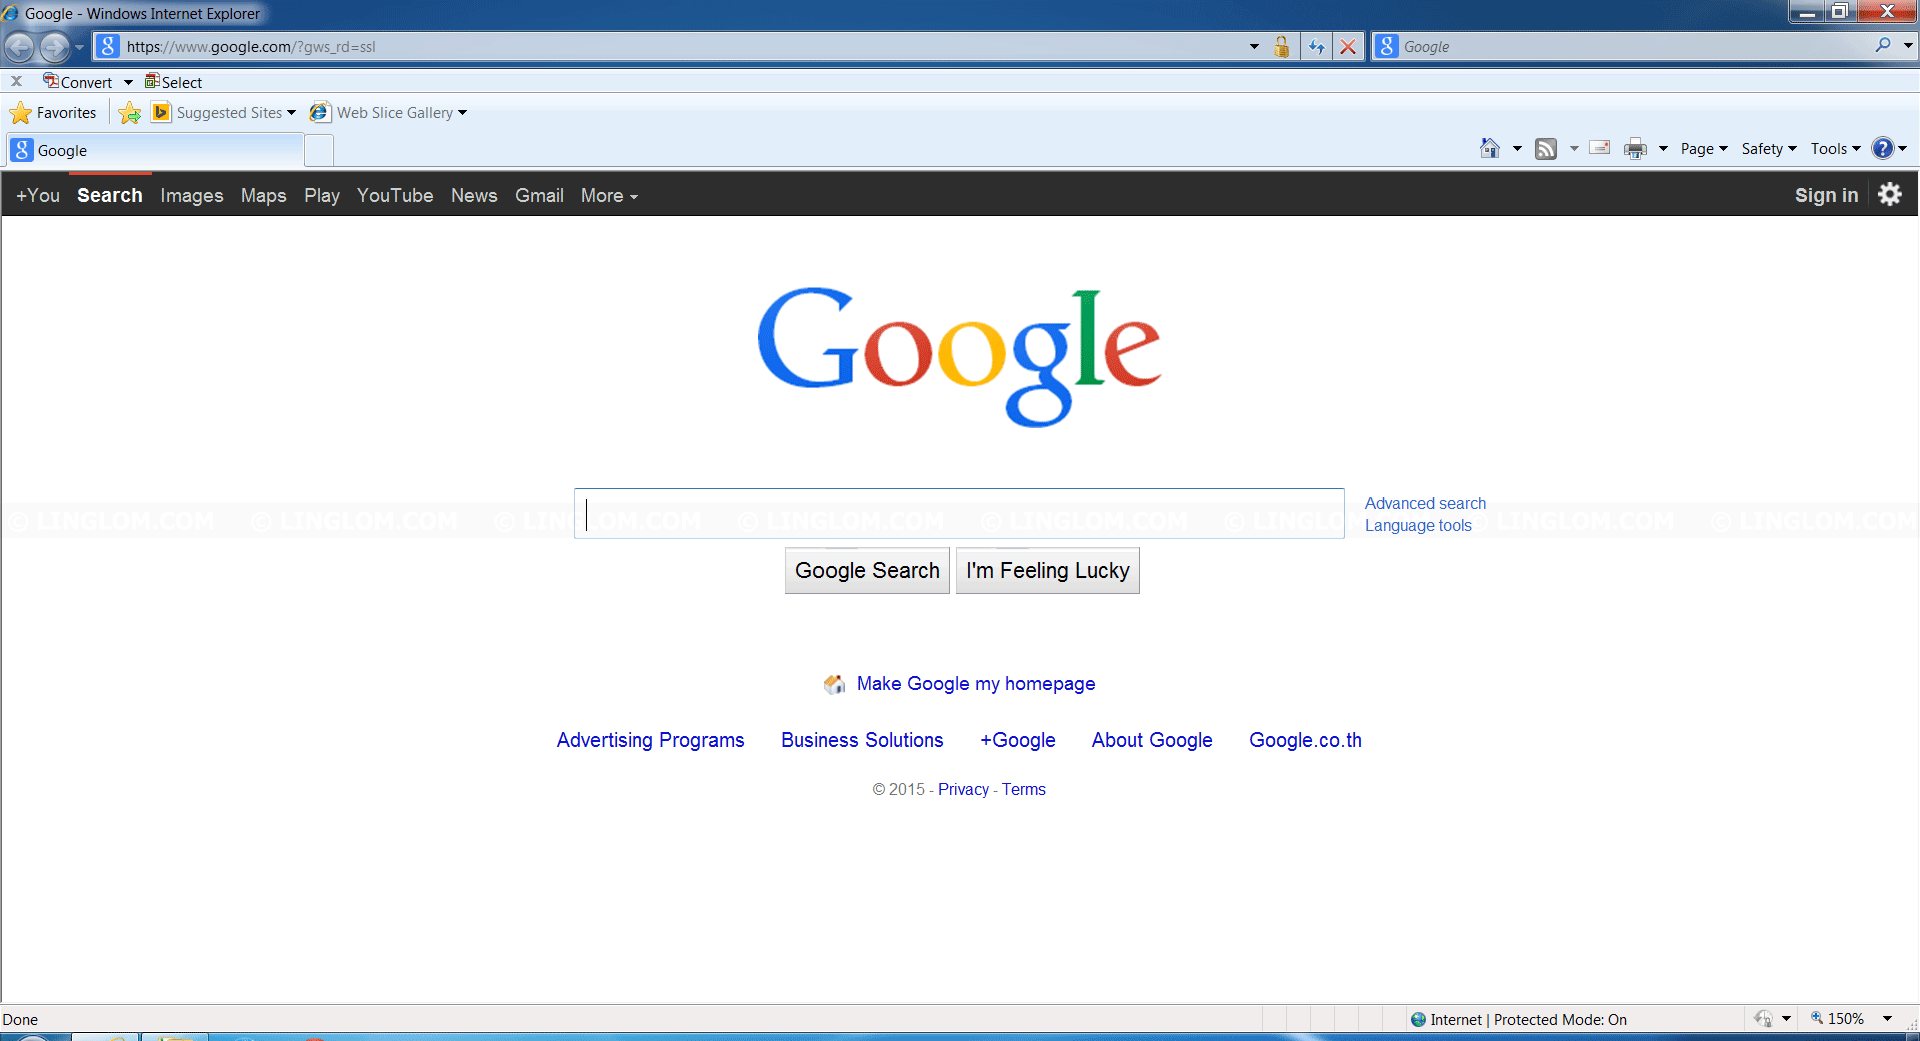 Google on Internet Explorer